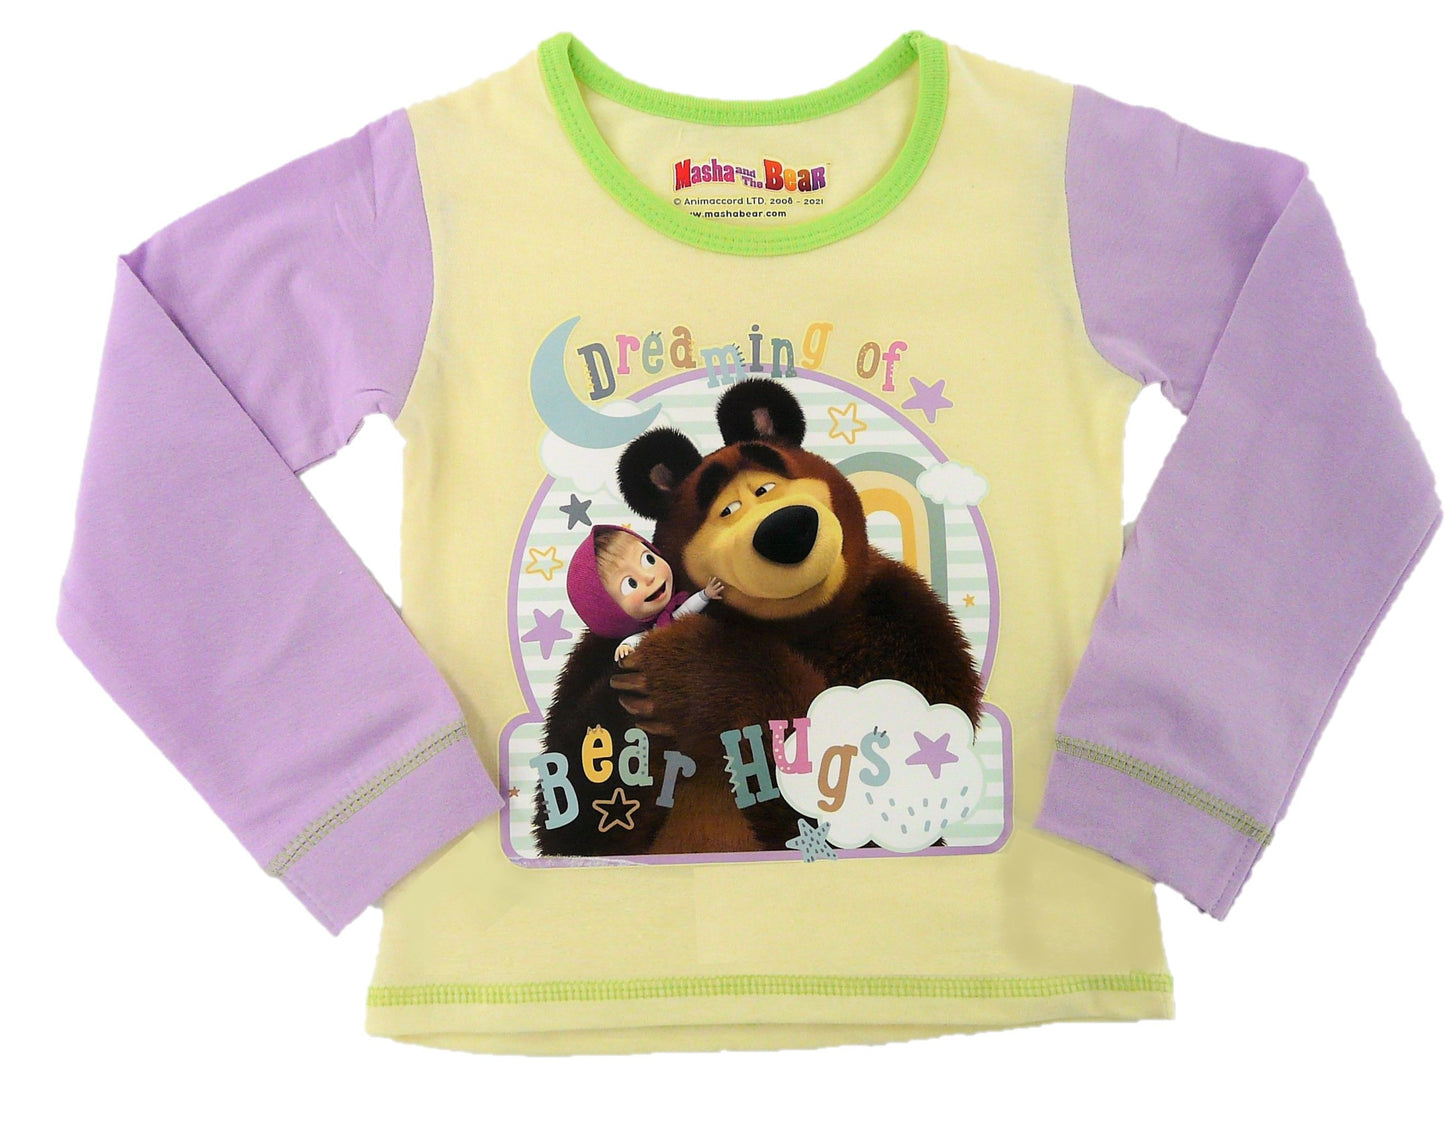 Masha and the Bear "Dreaming Of Bear Hugs" Girl's Pyjamas